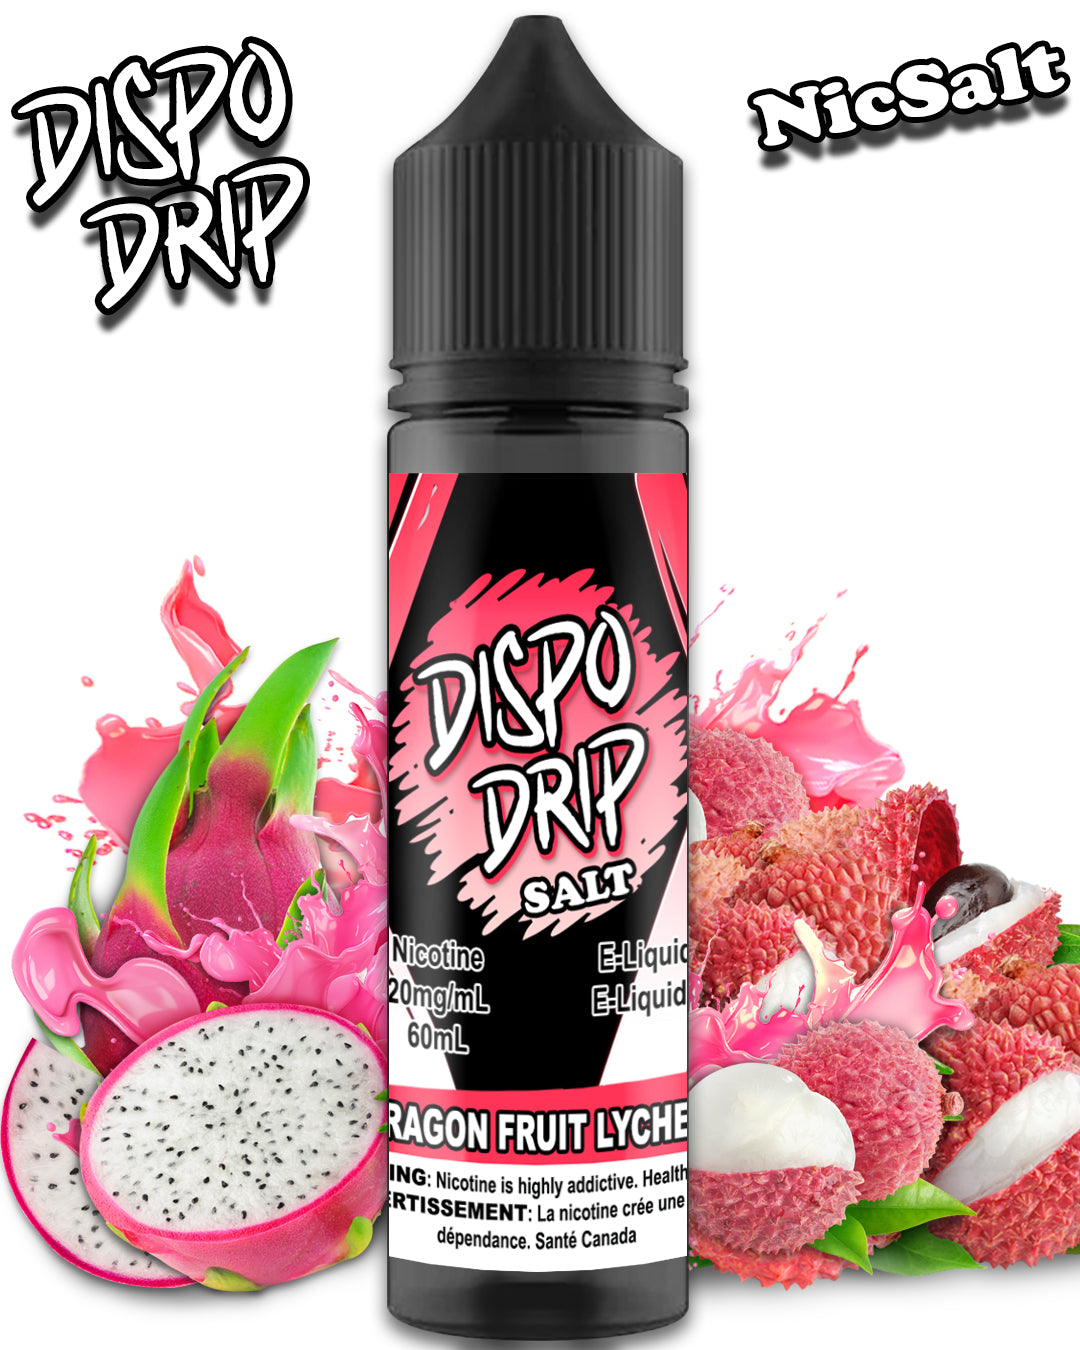 DISPO DRIP ICED - Dragonfruit Lychee